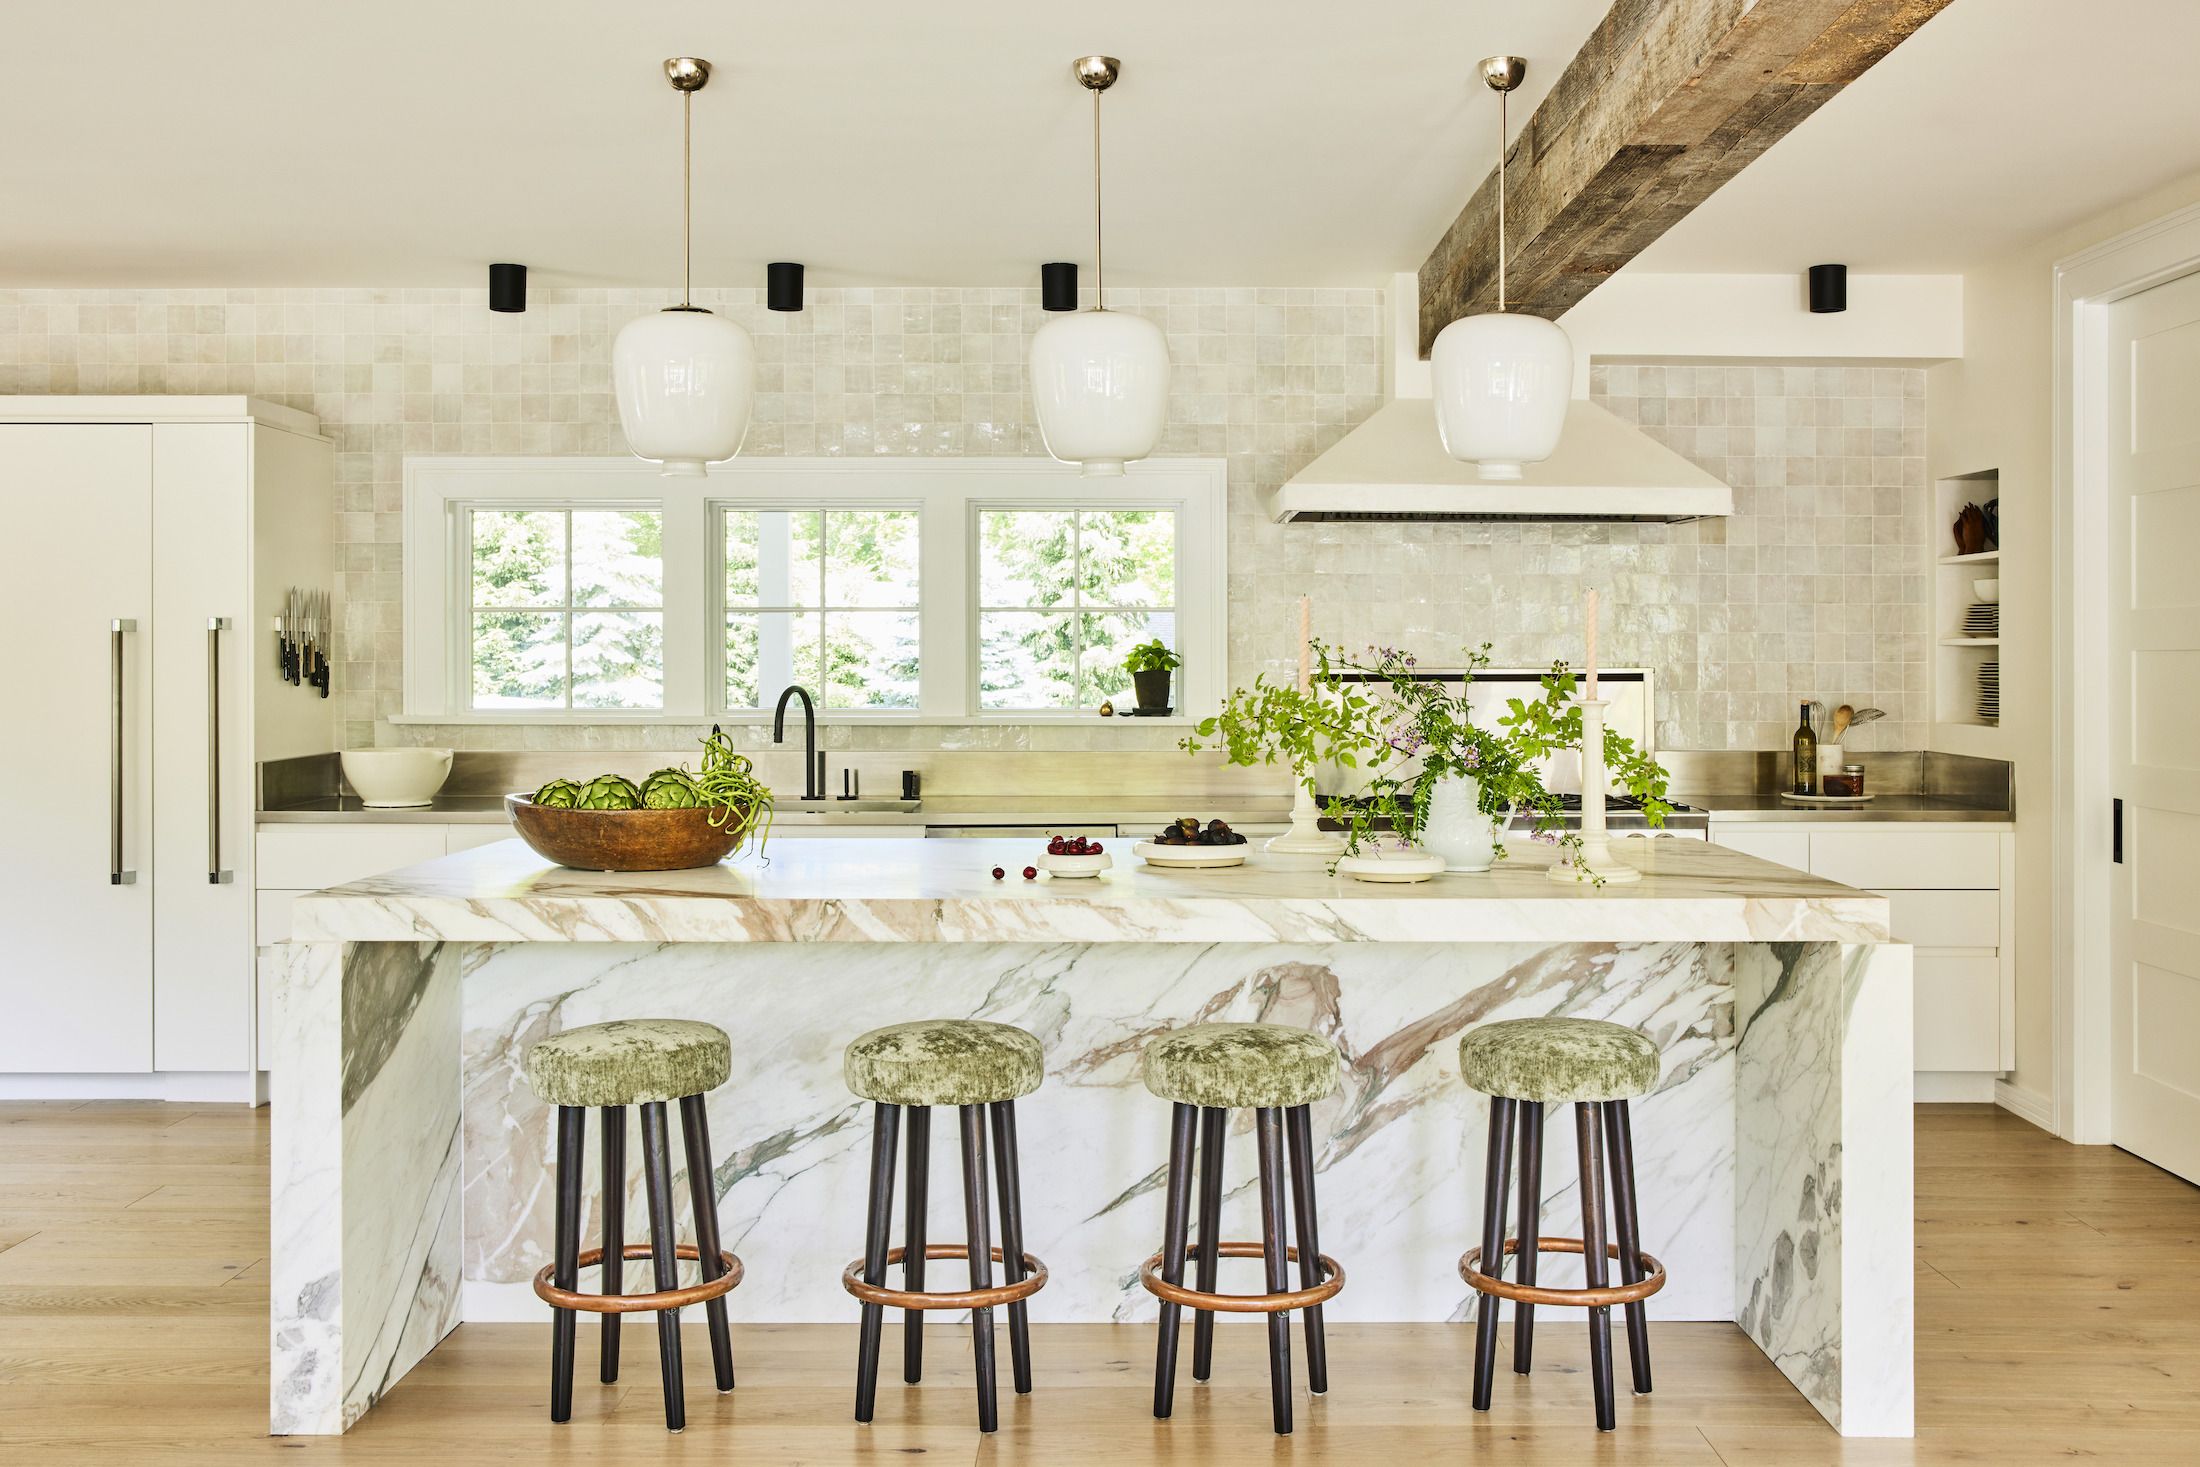 21 Kitchen Design Ideas   Remodeling Ideas for Interior Design